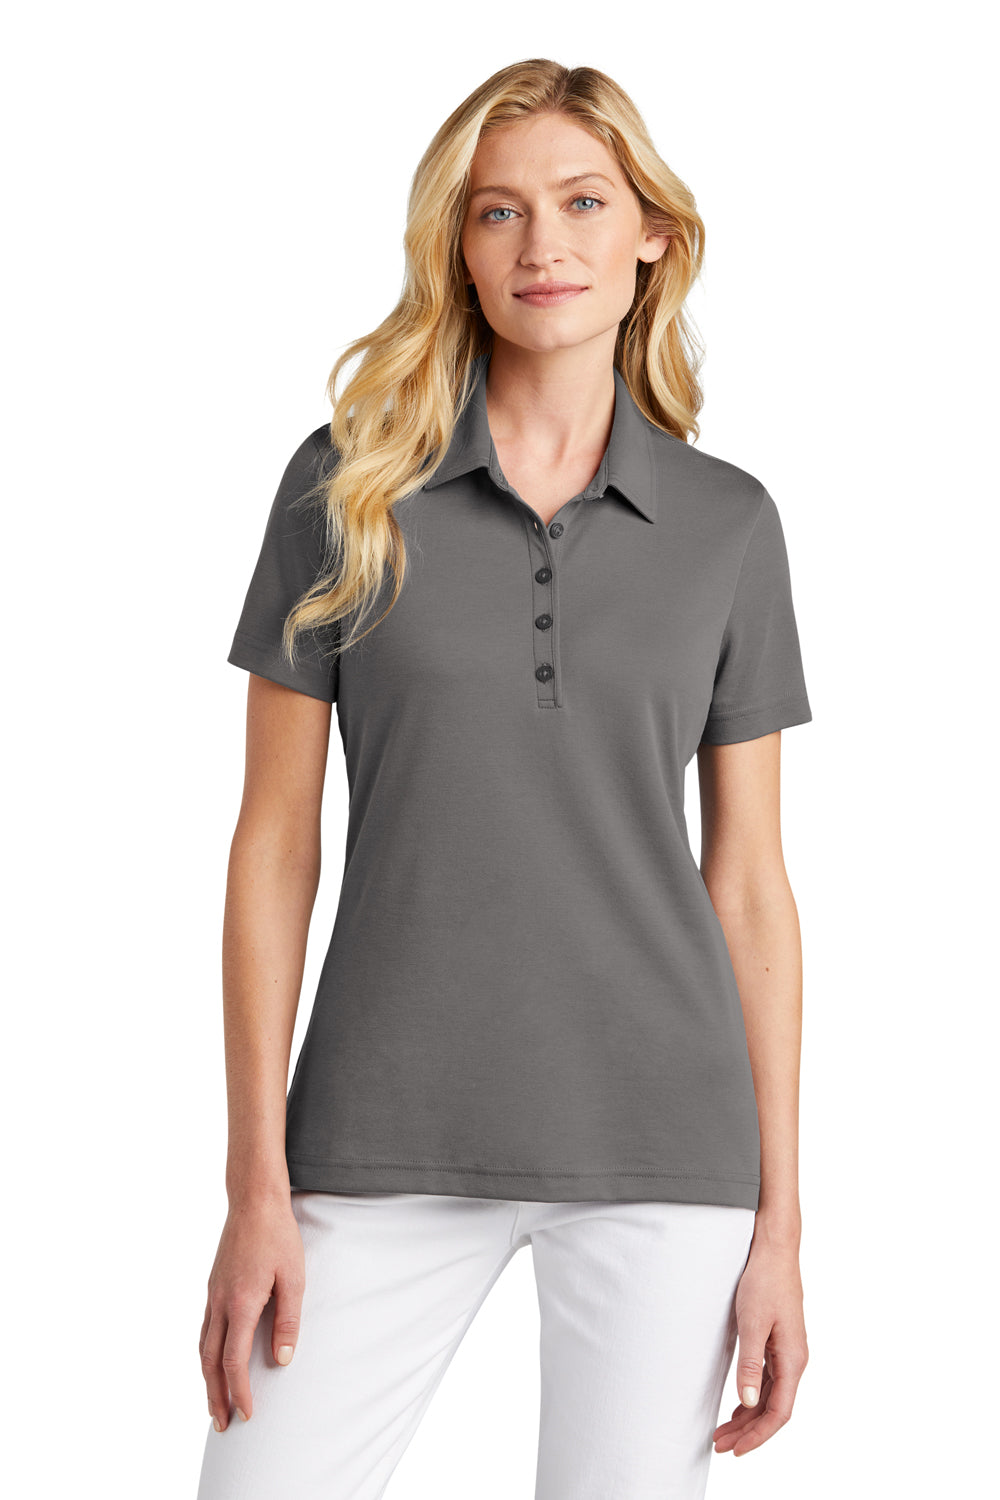 TravisMathew TM1WW001 Womens Oceanside Wrinkle Resistant Short Sleeve Polo Shirt Quiet Shade Grey Model Front